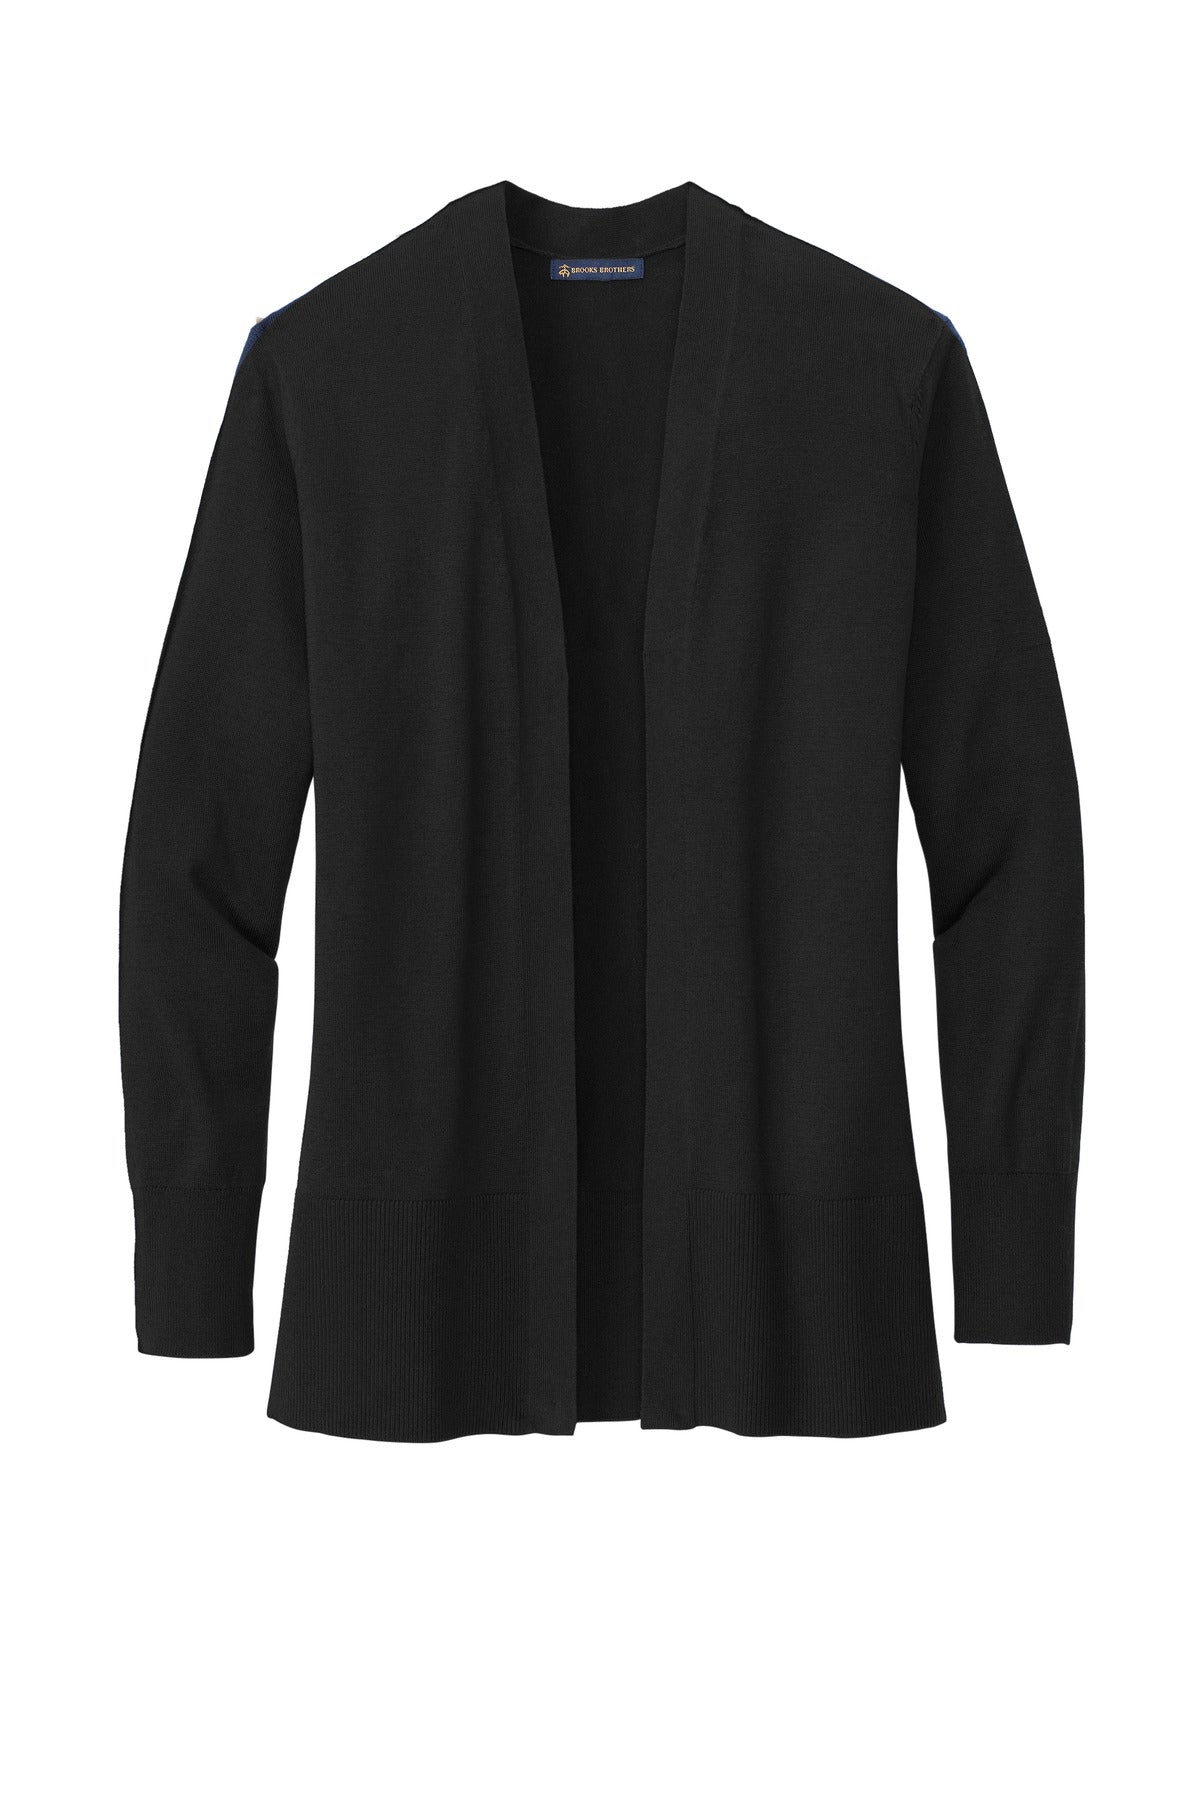 Brooks Brothers® Women's Cotton Stretch Long Cardigan Sweater BB18403